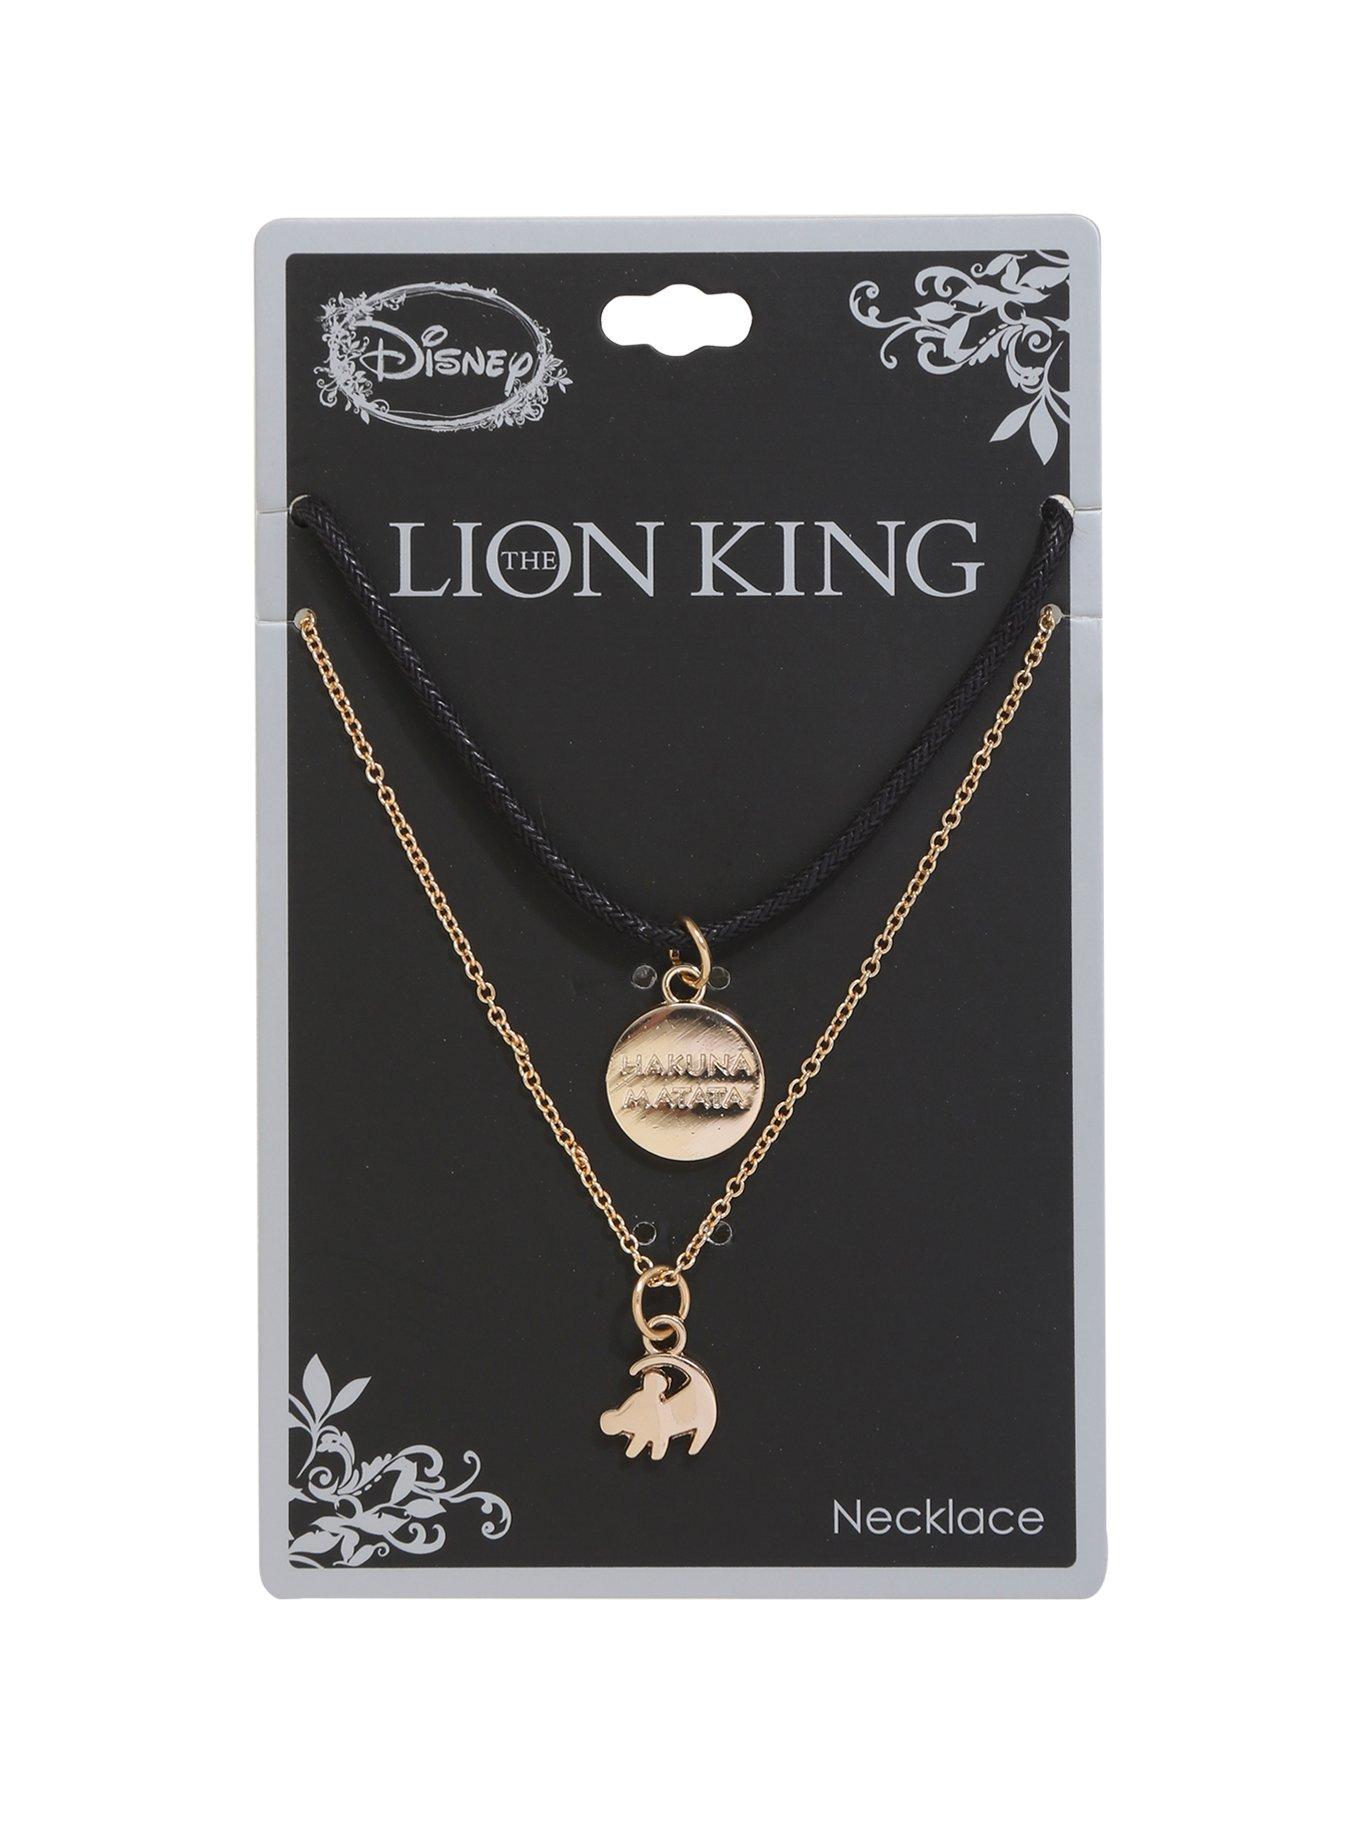 Disney The Lion King Hakuna Matata Layered Necklace, , hi-res